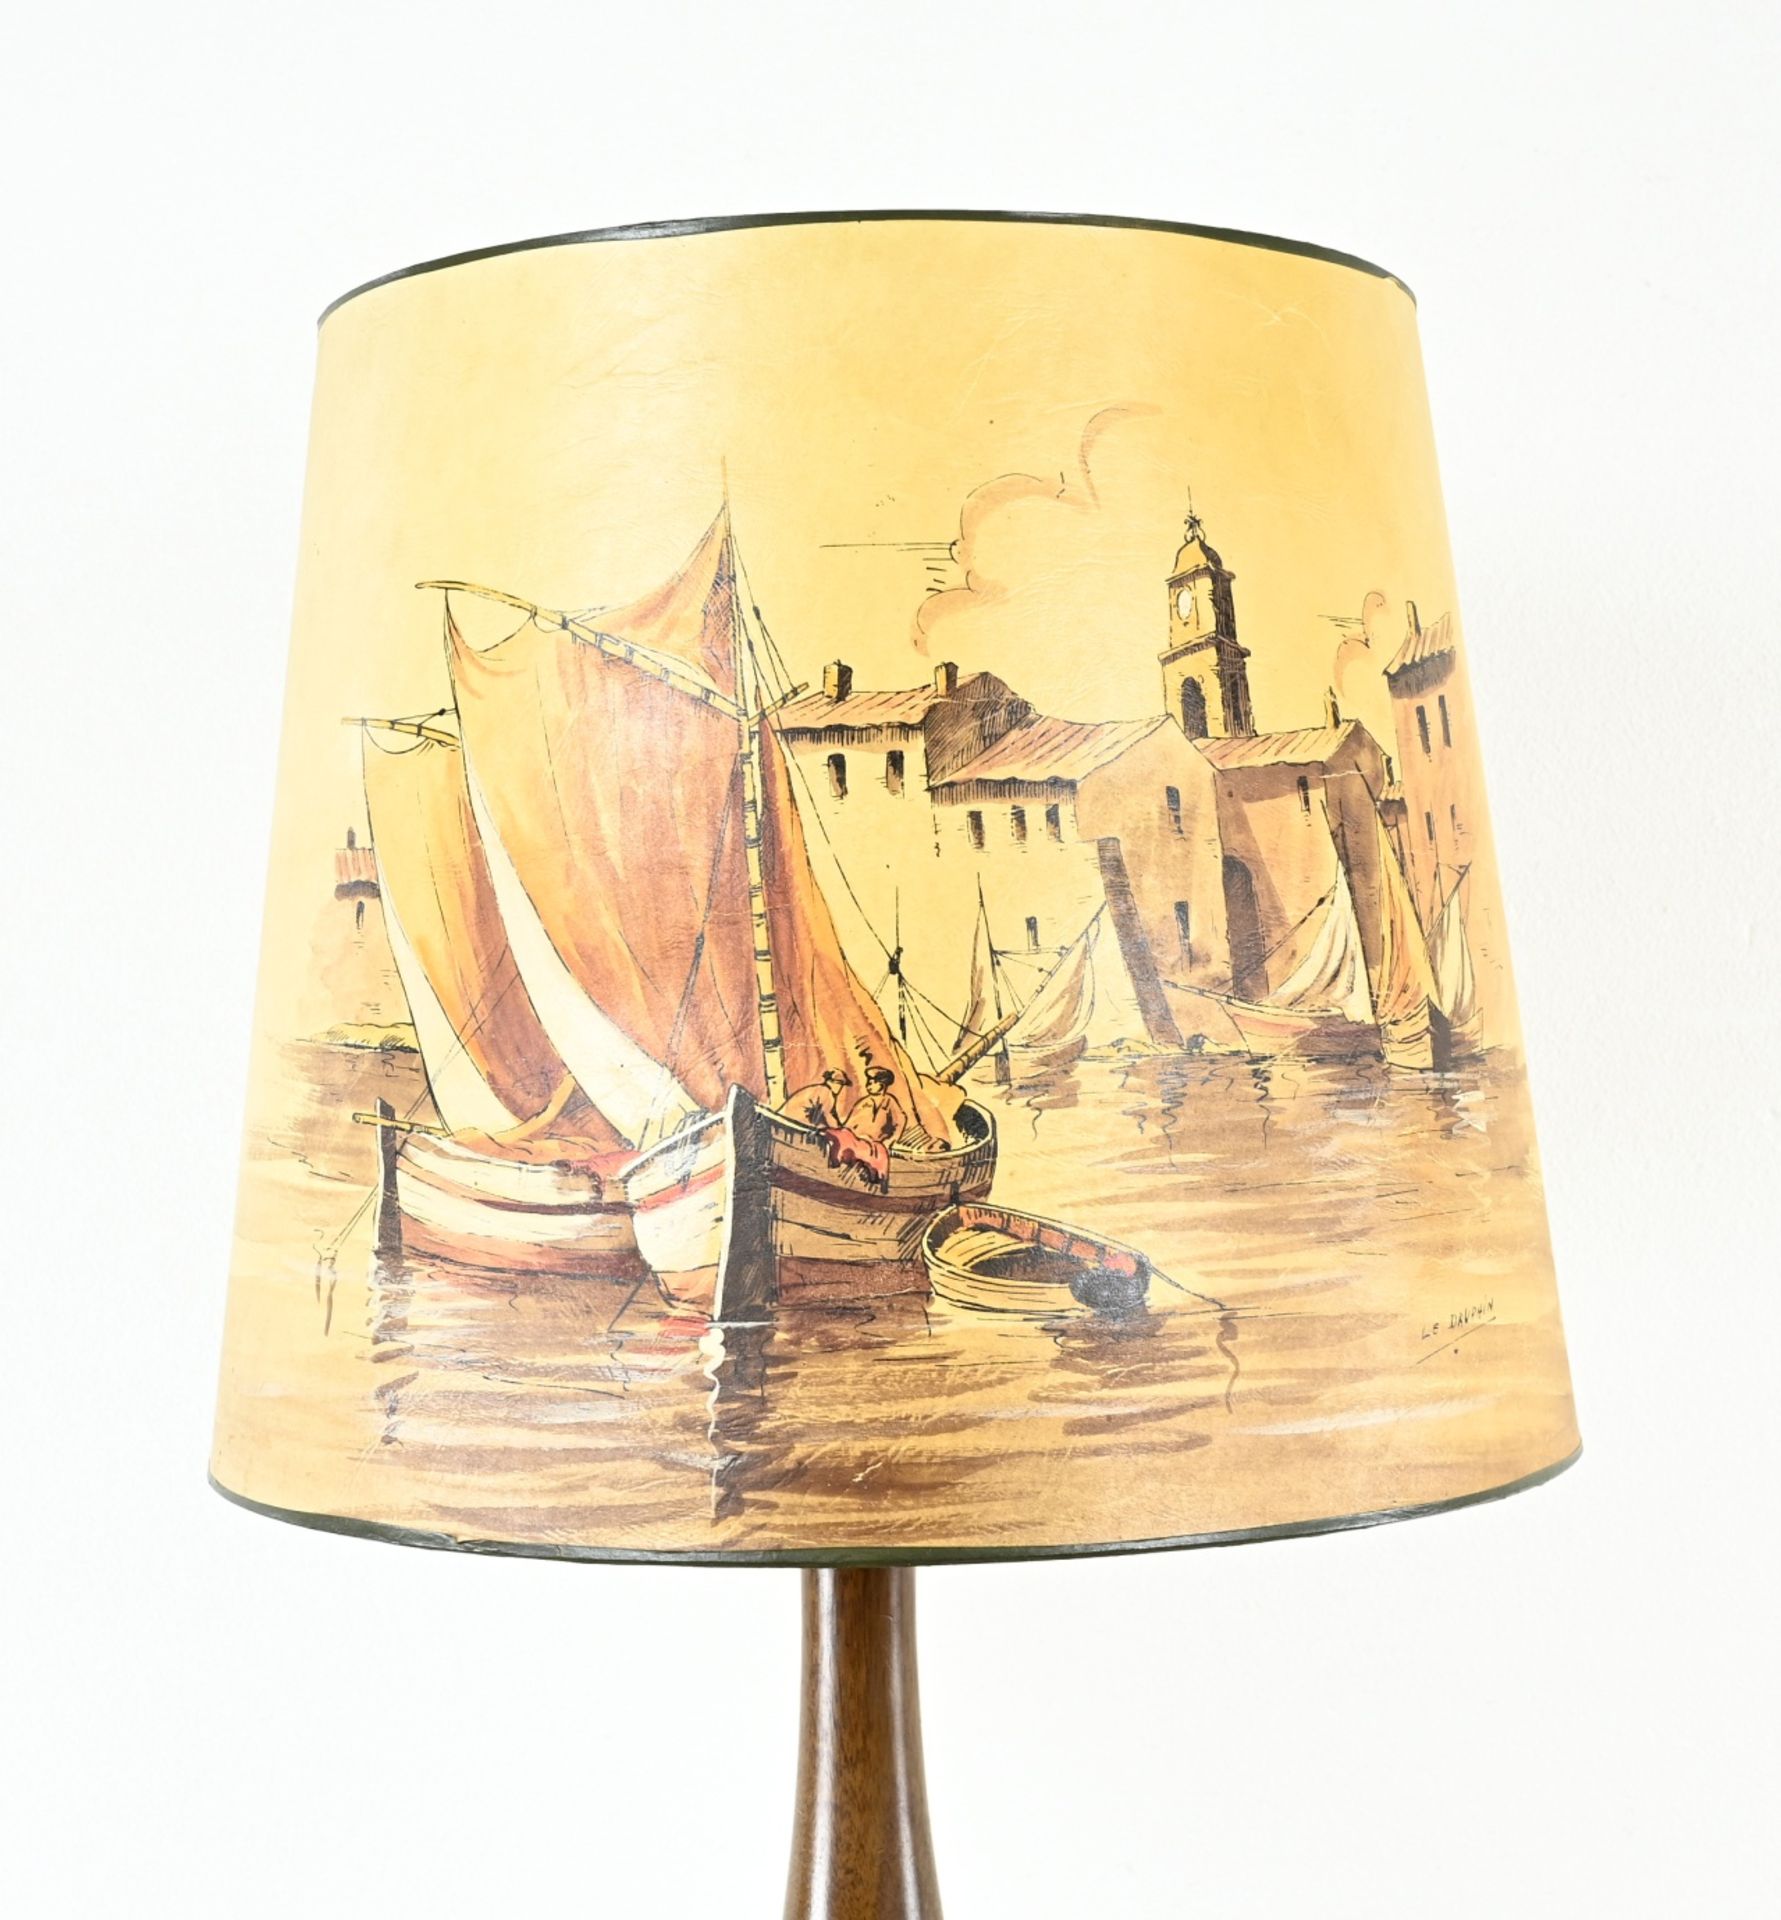 Lamp base, H 180 cm. - Image 2 of 3